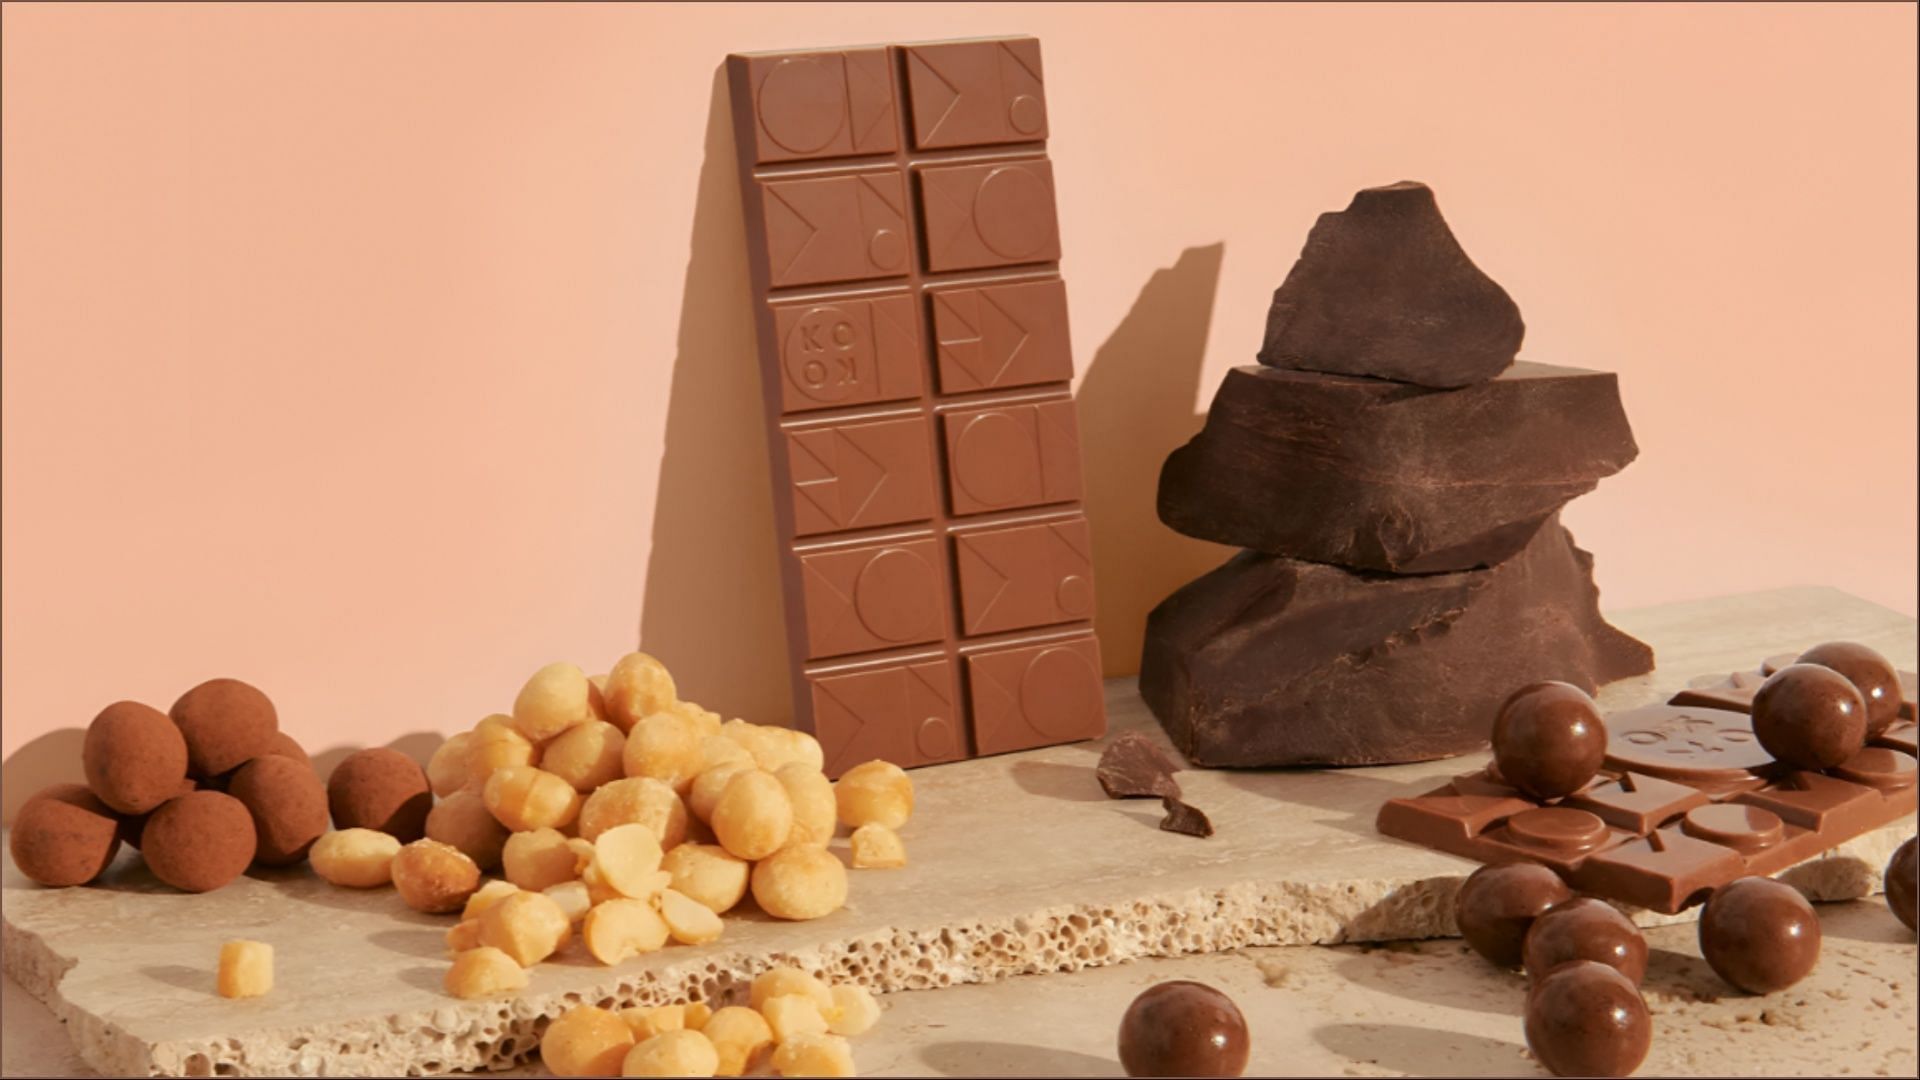 Koko Black recalls chocolate products over undeclared milk allergen concerns (Image via Koko Black)